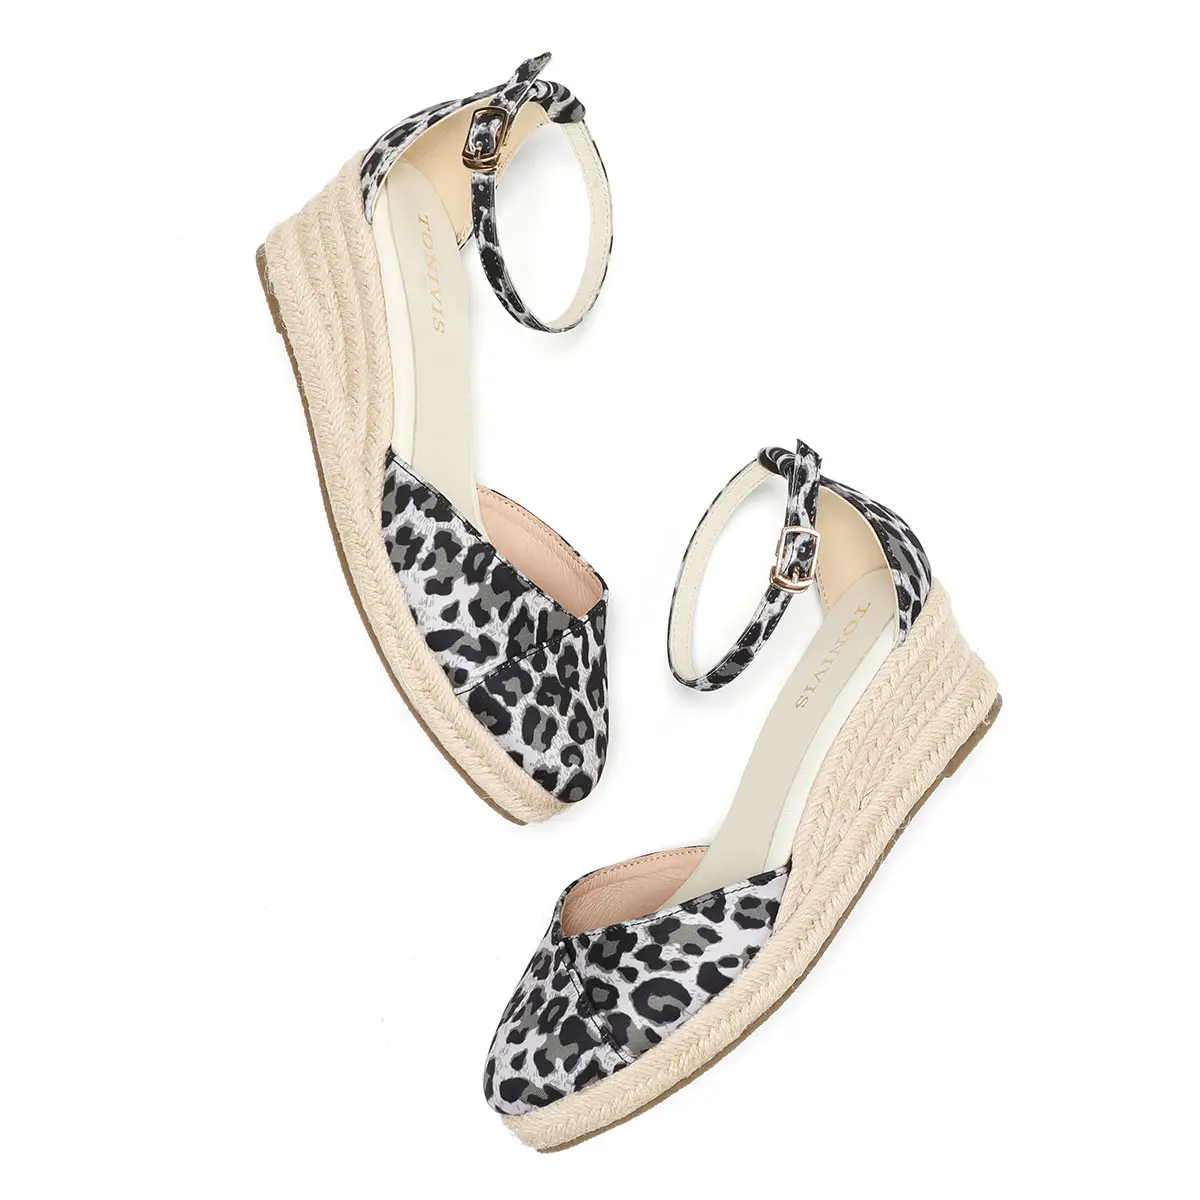 New Womens Party Platform Pumps Killer HIGH Heels Stiletto Court Shoes Size  3-8 Gold Glitter: Amazon.co.uk: Fashion